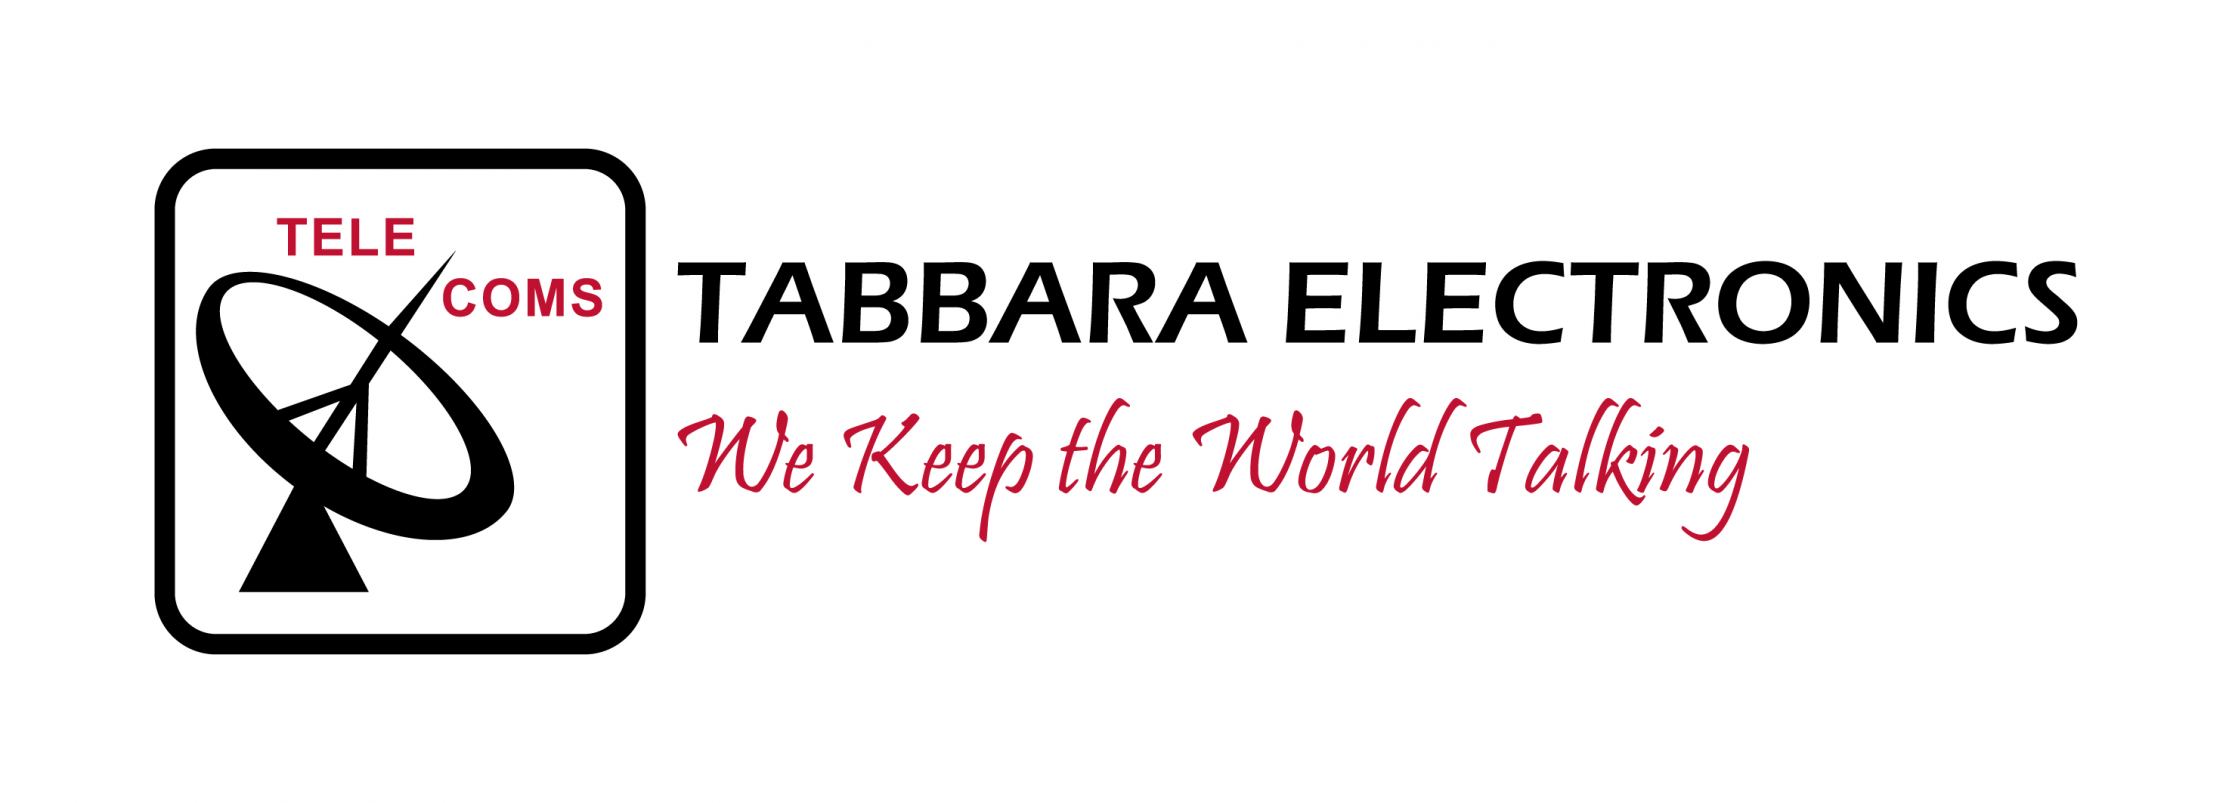 tabbaraelectronics Logo